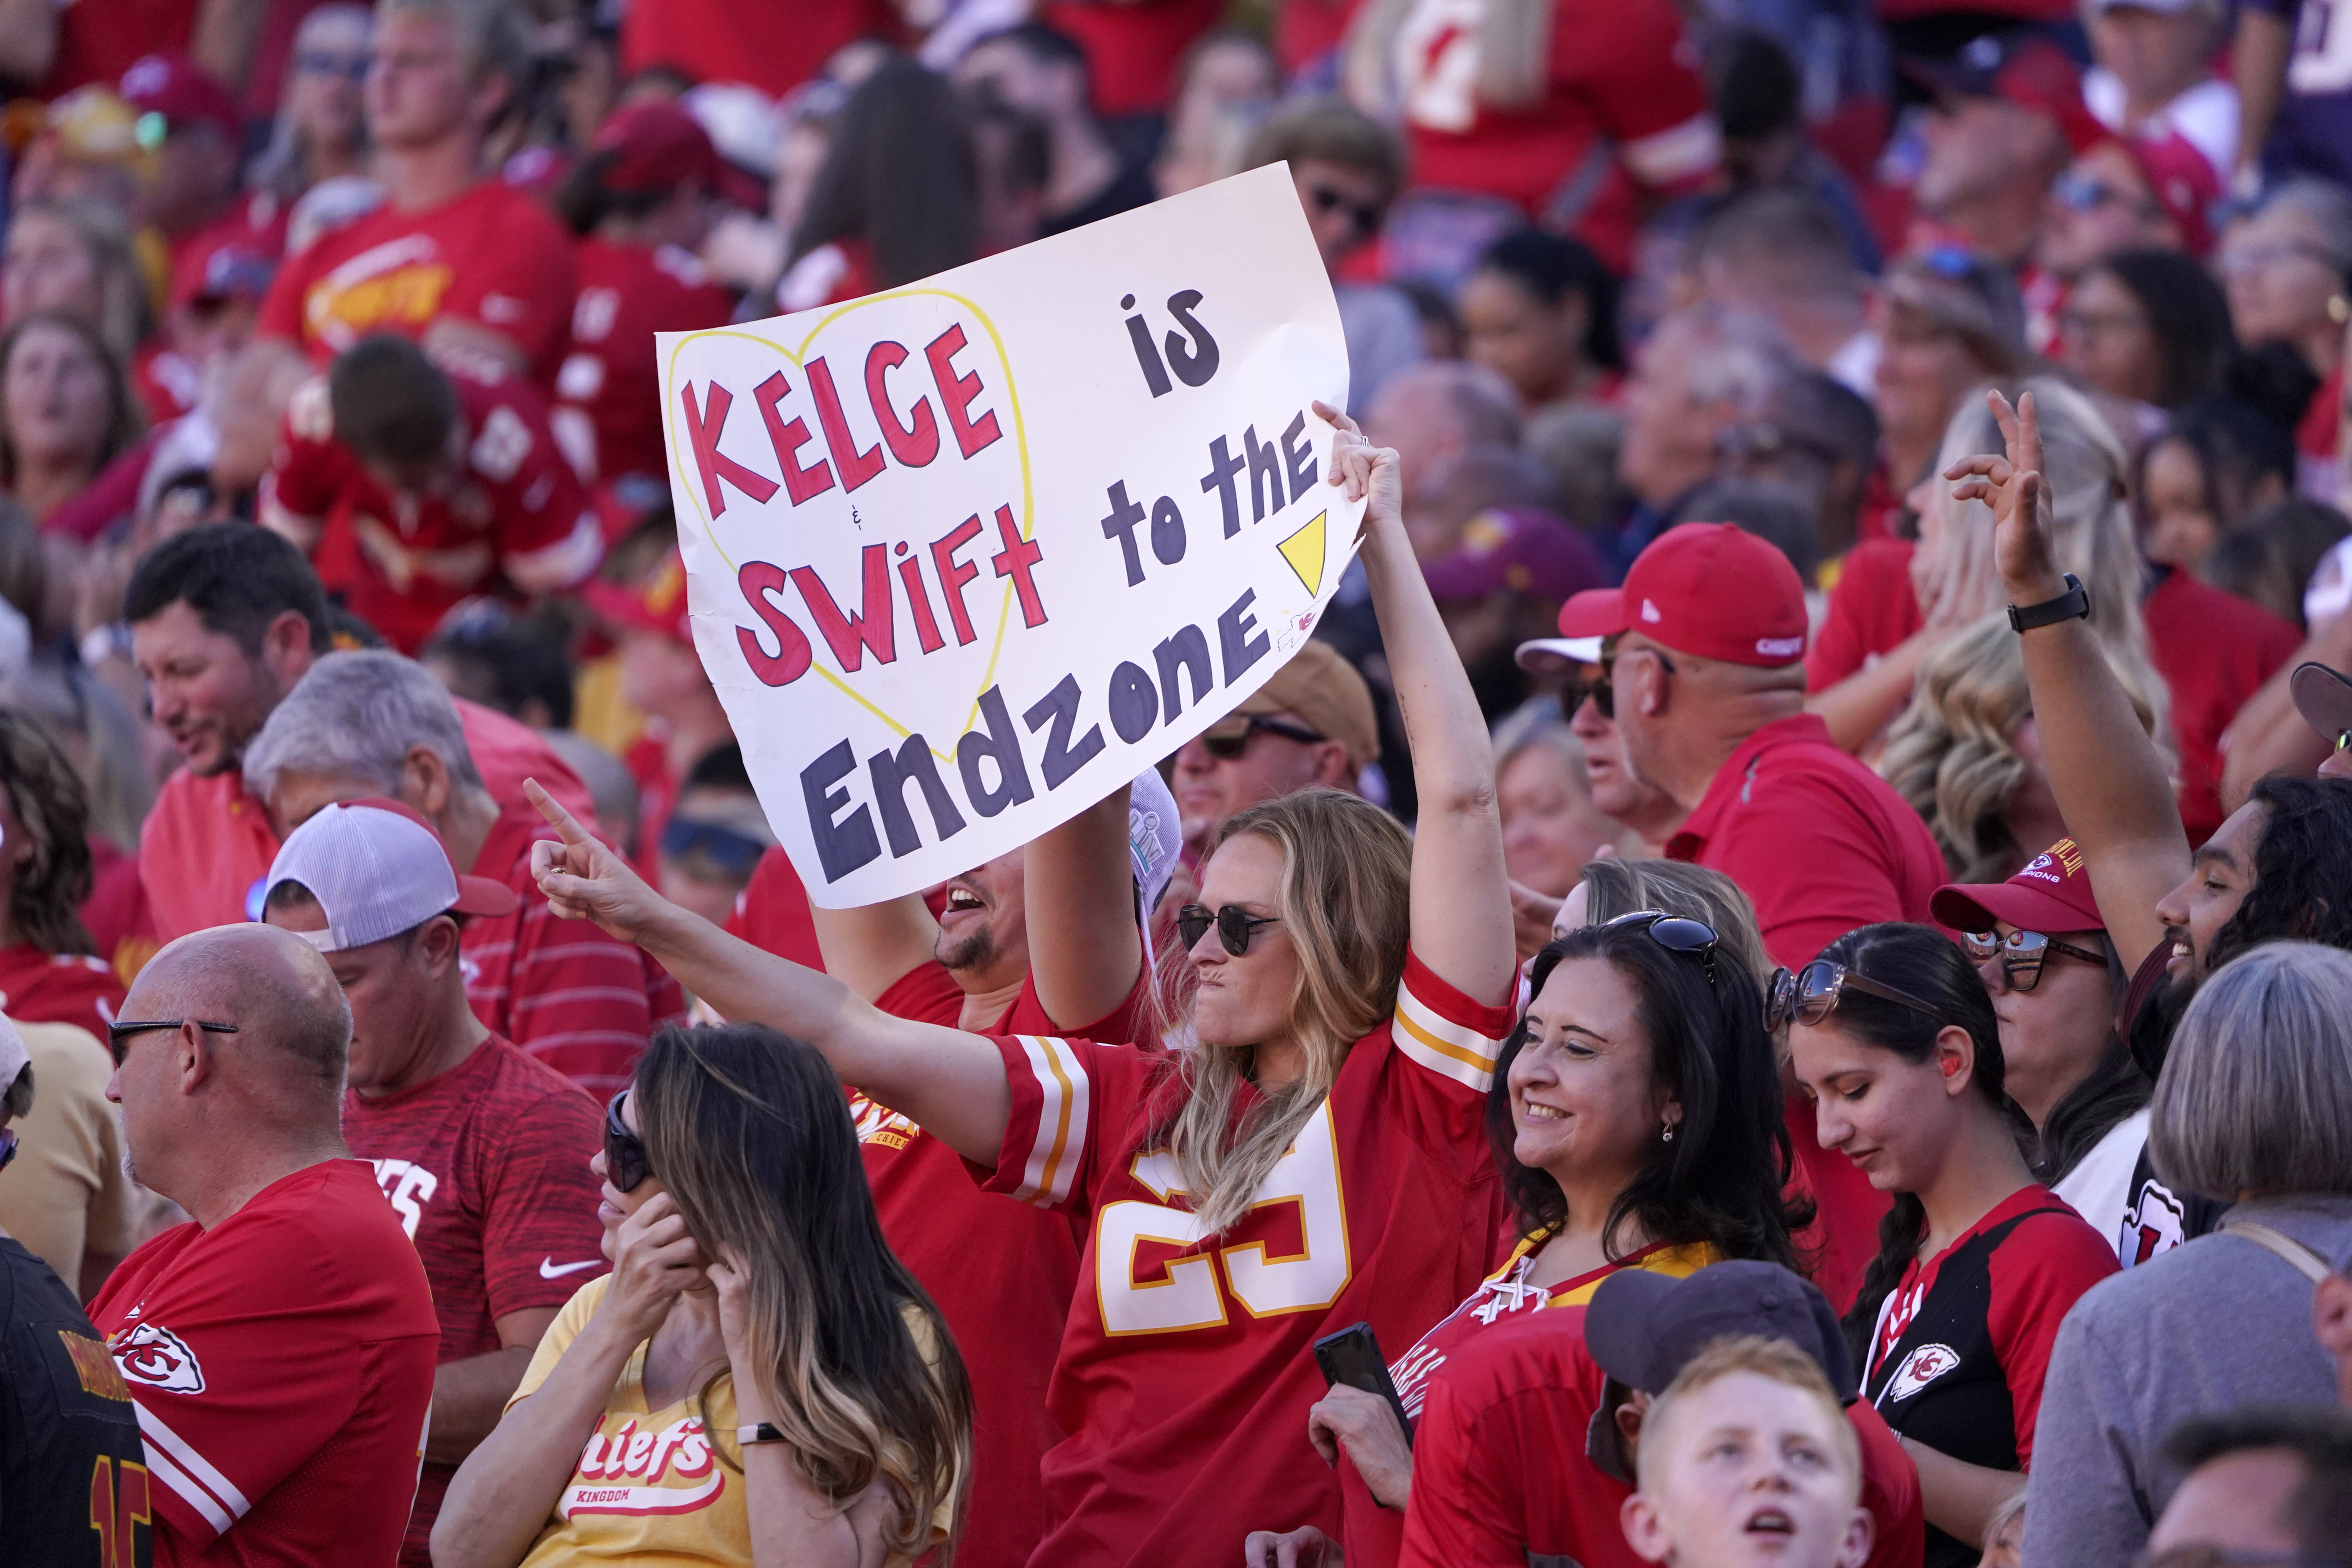 Taylor Swift fans getting into Chiefs NFL football, Travis Kelce